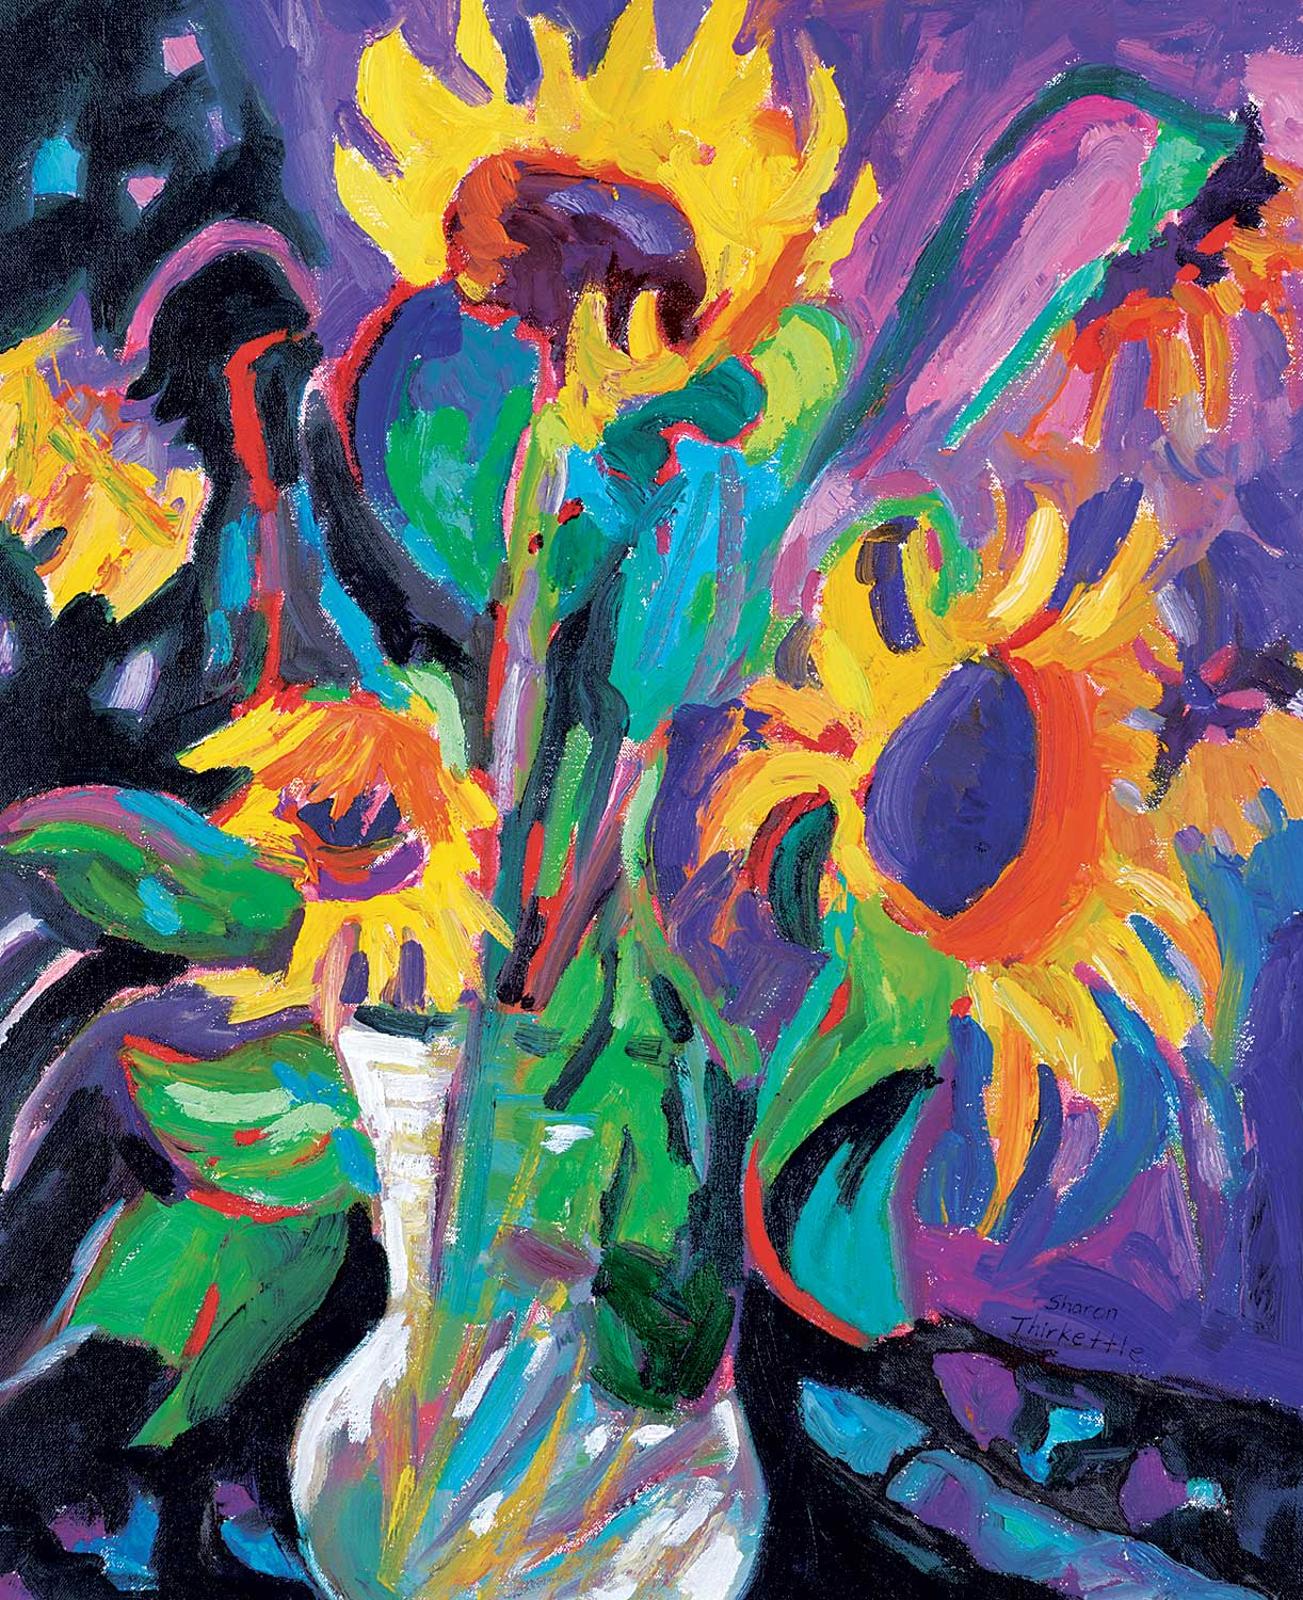 Sharon Thirkettle (1950) - Untitled - Colourful Sunflowers